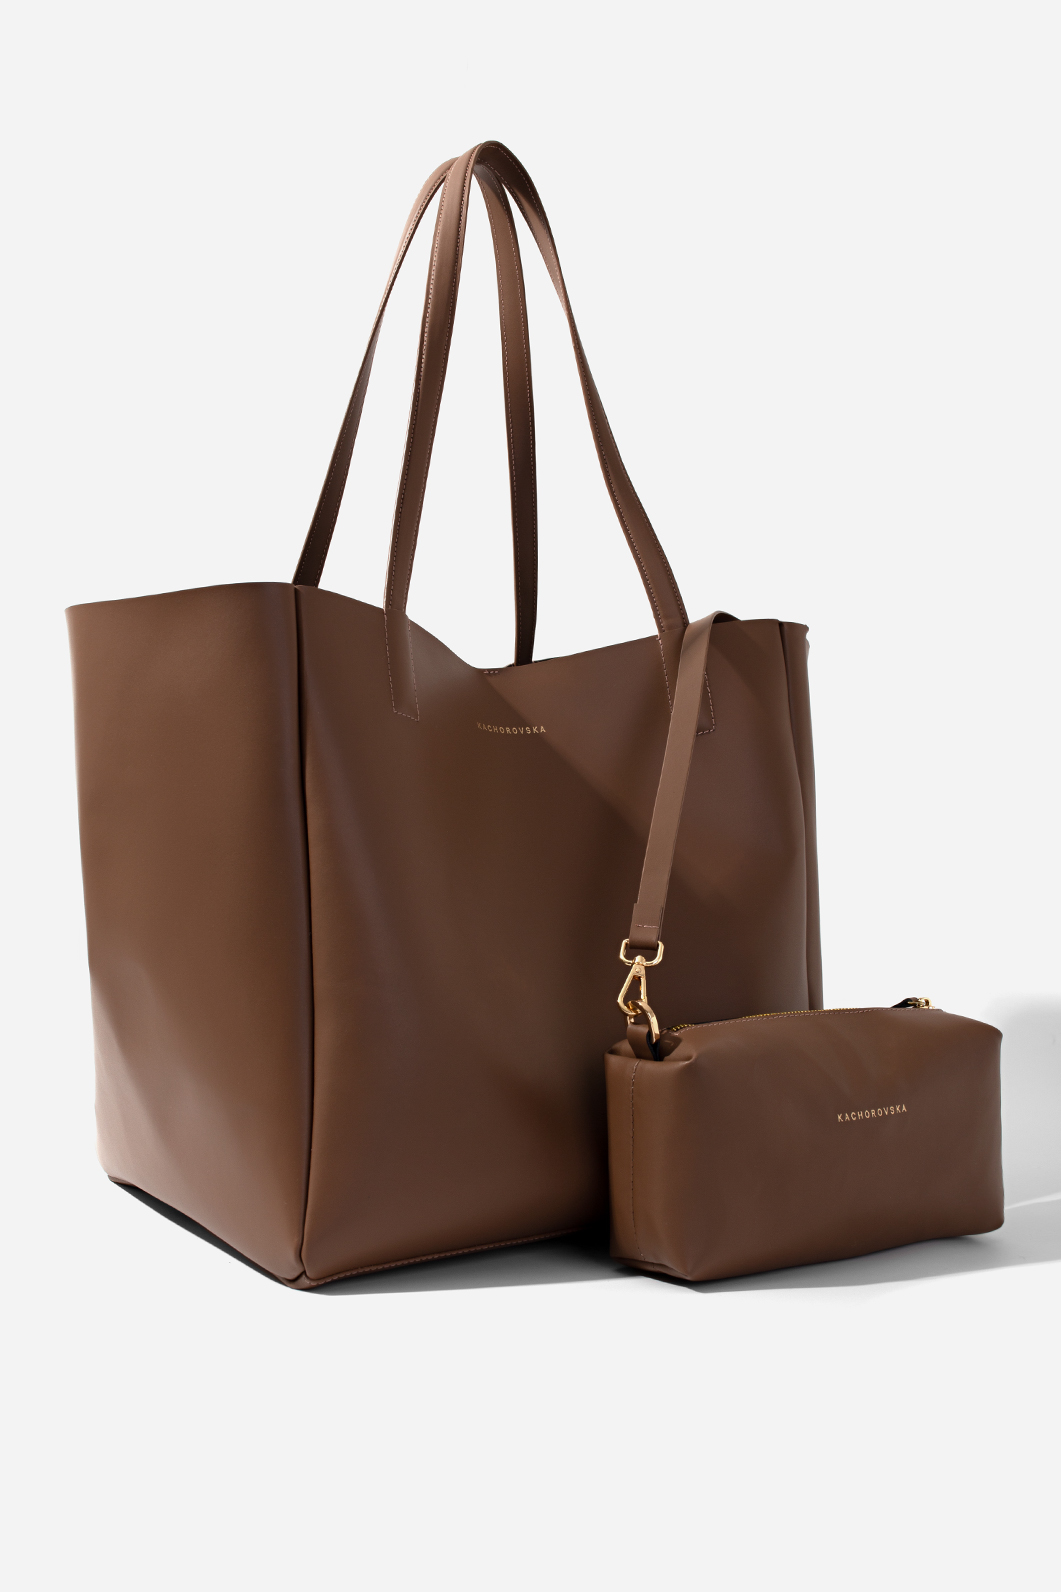 Matilda dark-brown leather
shopper bag /gold/